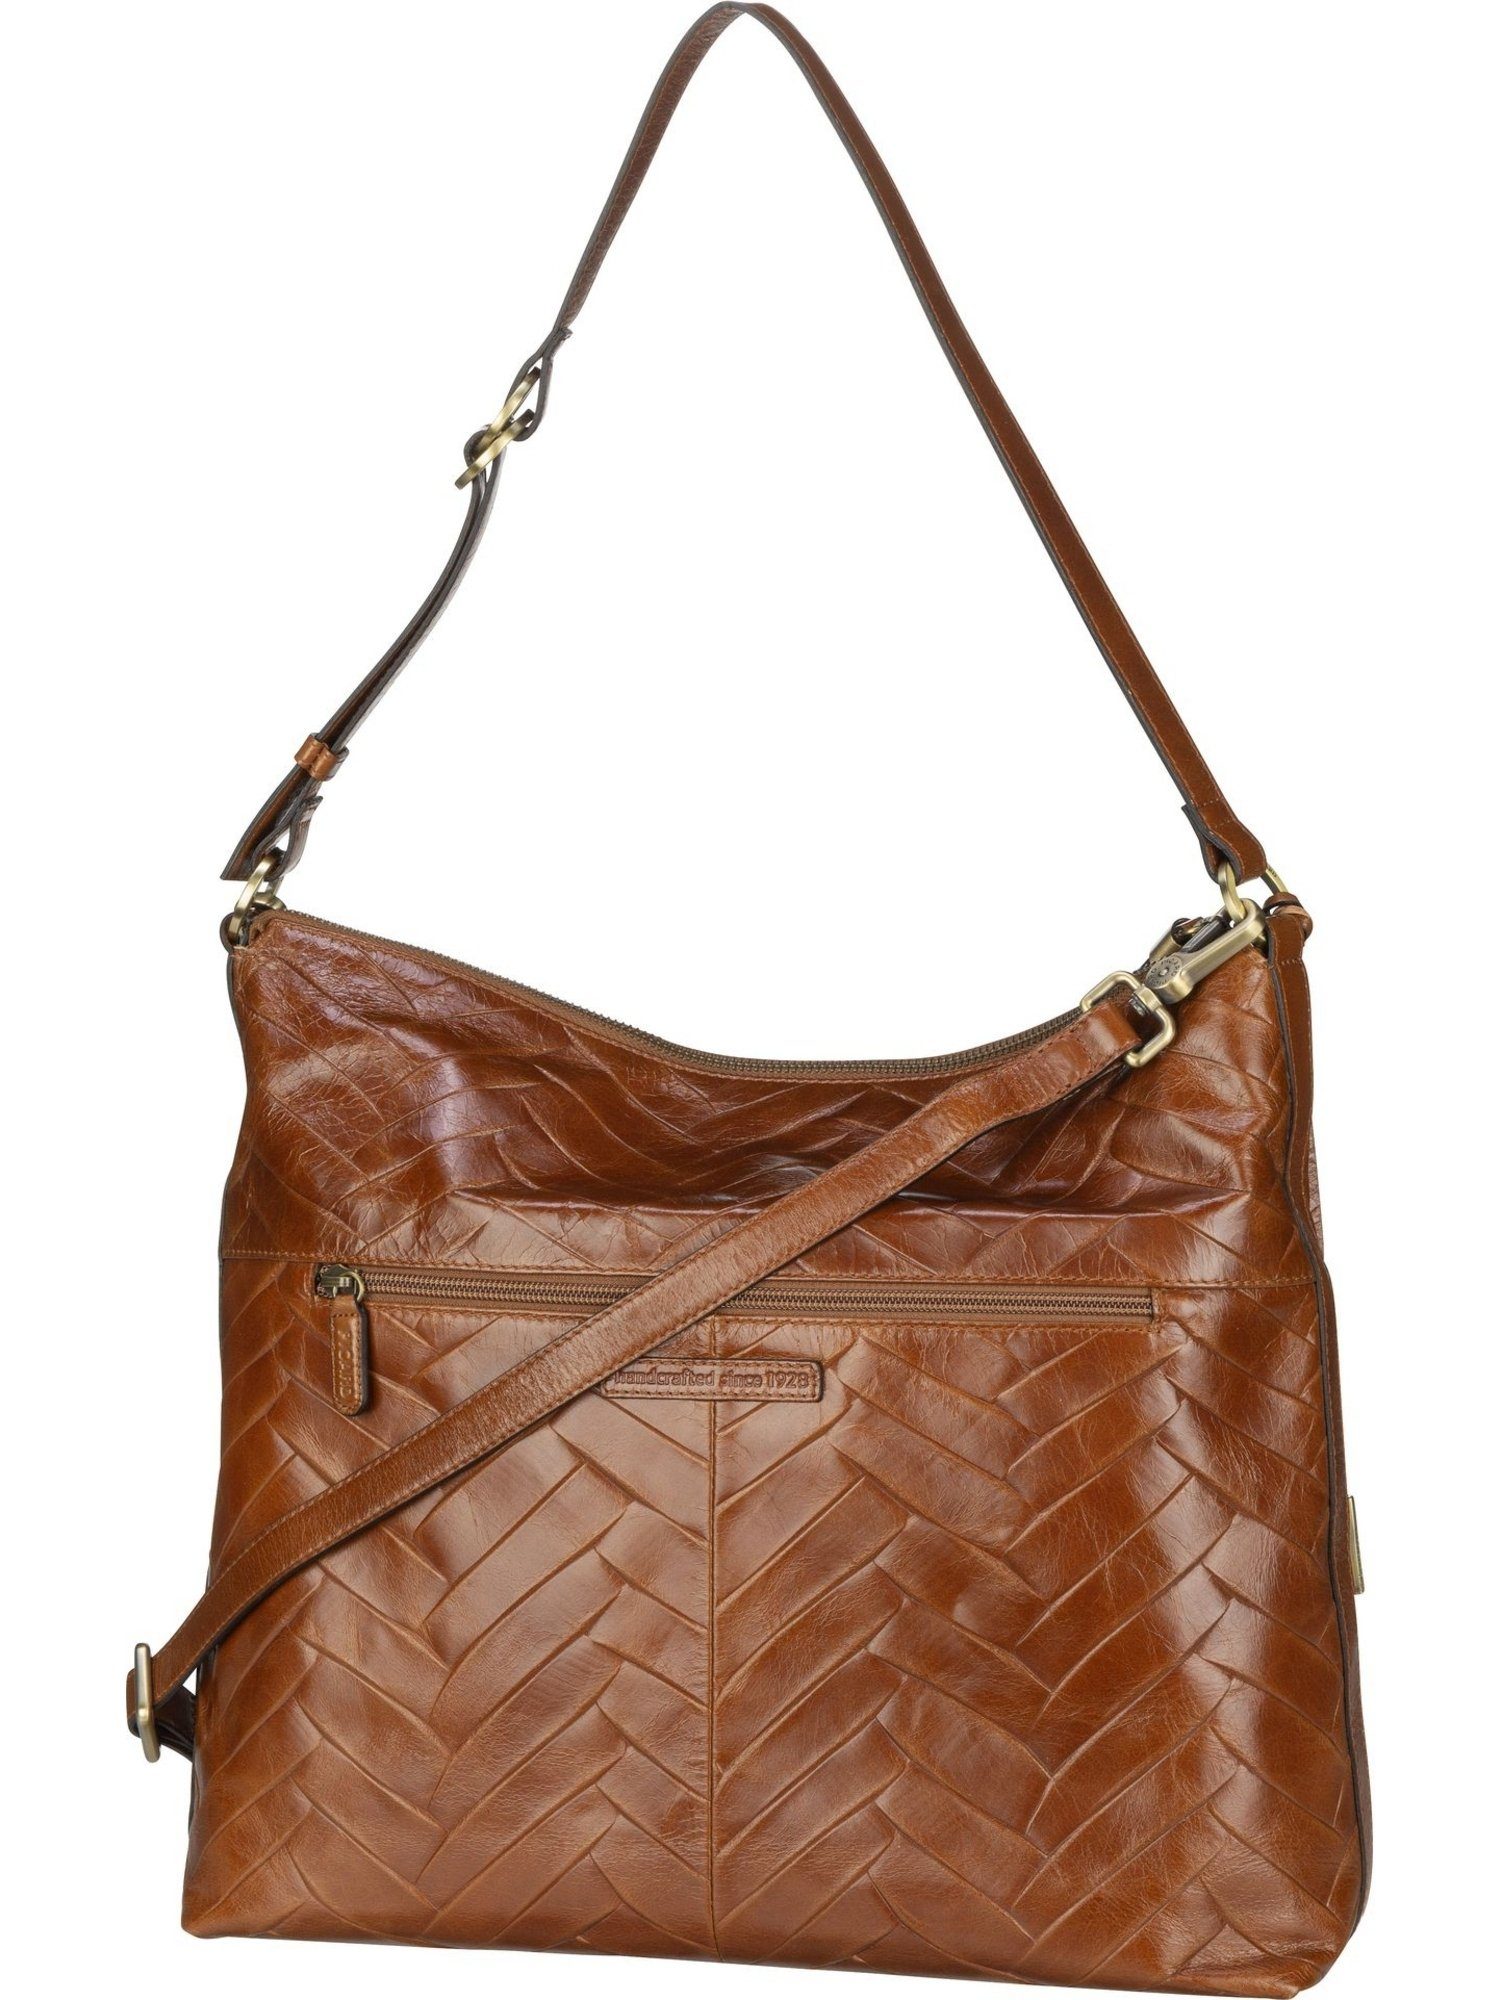 Damen Handtaschen Picard Handtasche Basket 5285, Beuteltasche / Hobo Bag